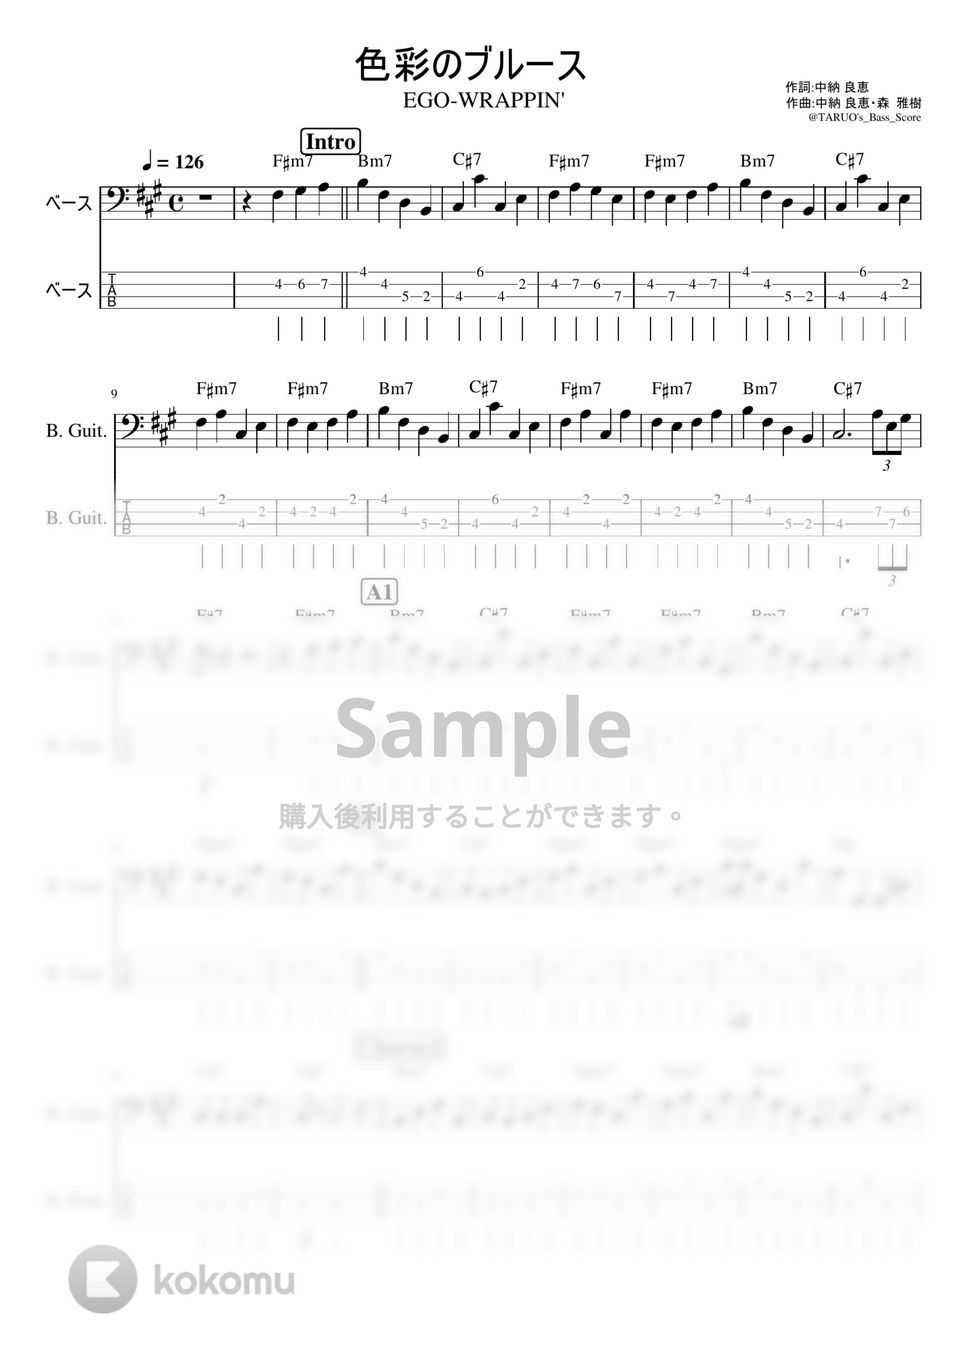 EGO-WRAPPIN' - 色彩のブルース (ベース / TAB) by TARUO's_Bass_Score